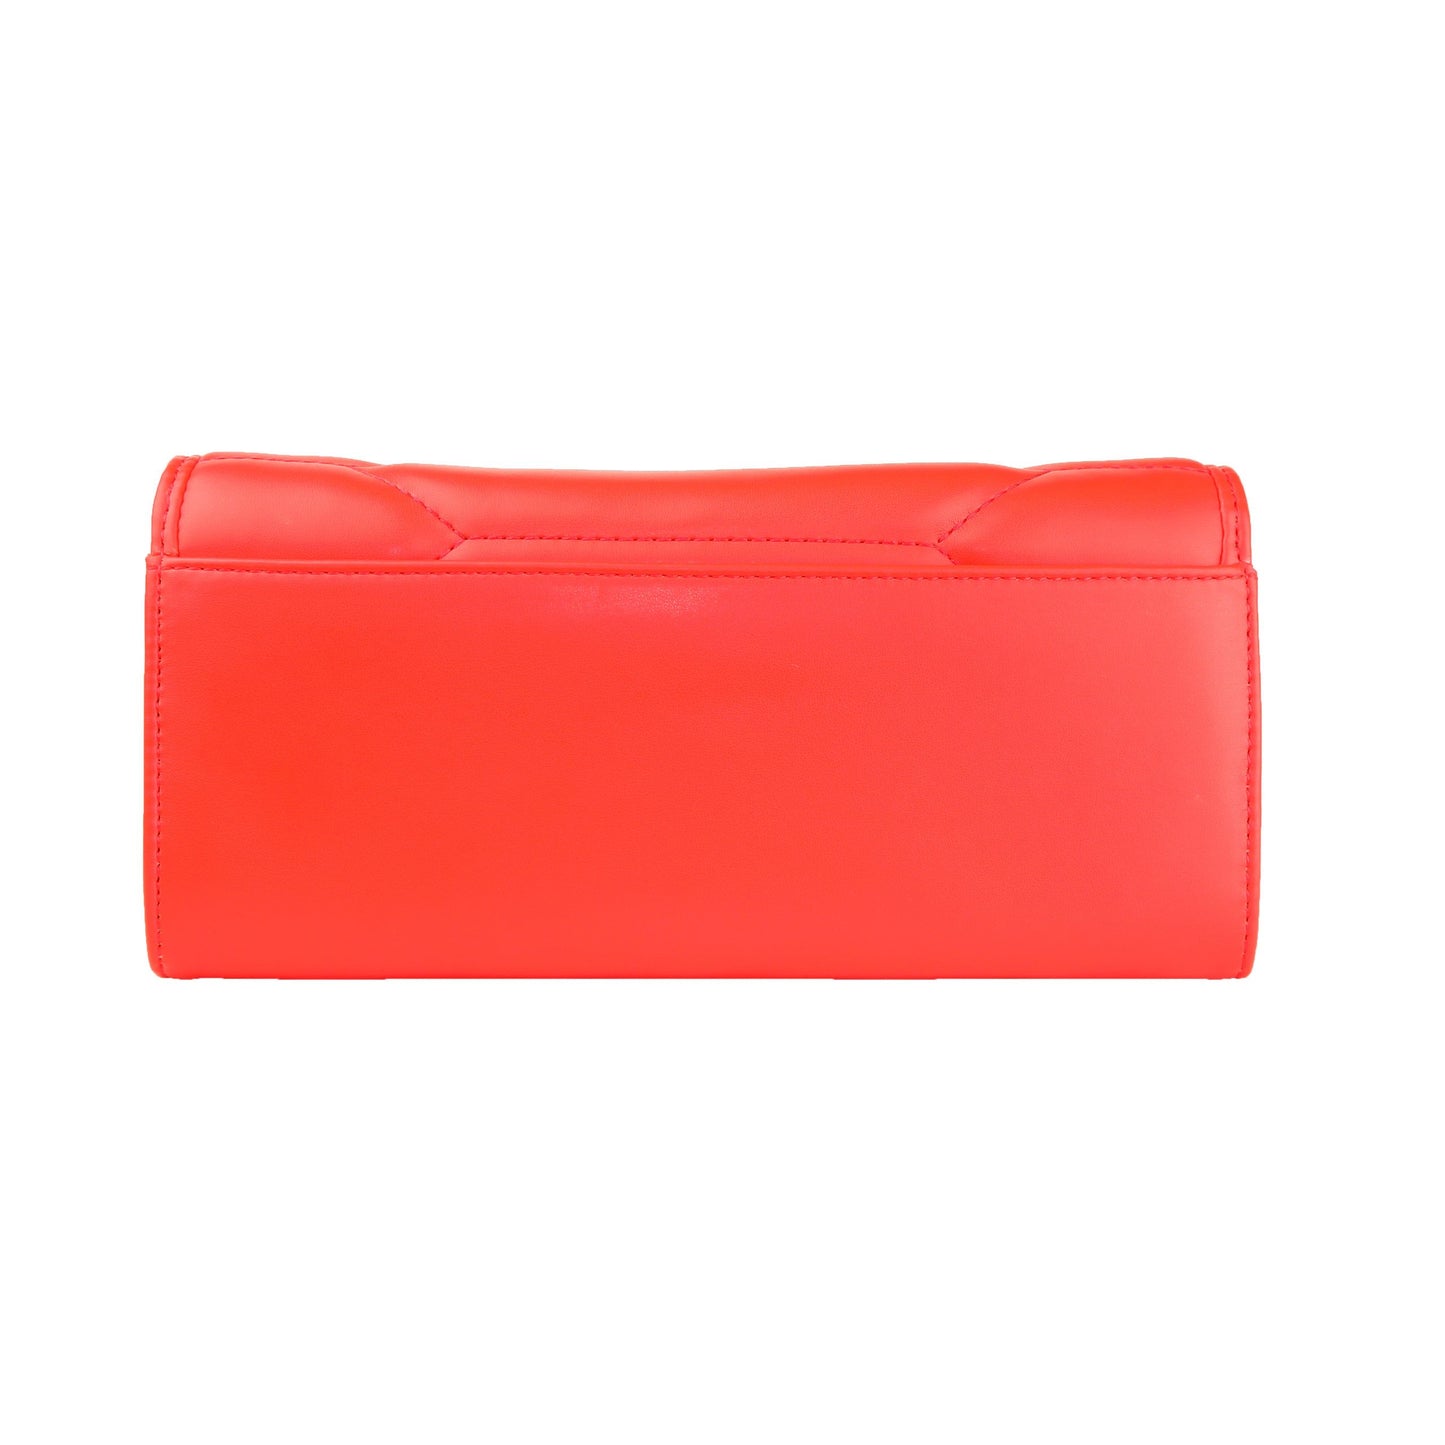 Coral Red Pochette with Adjustable Belt